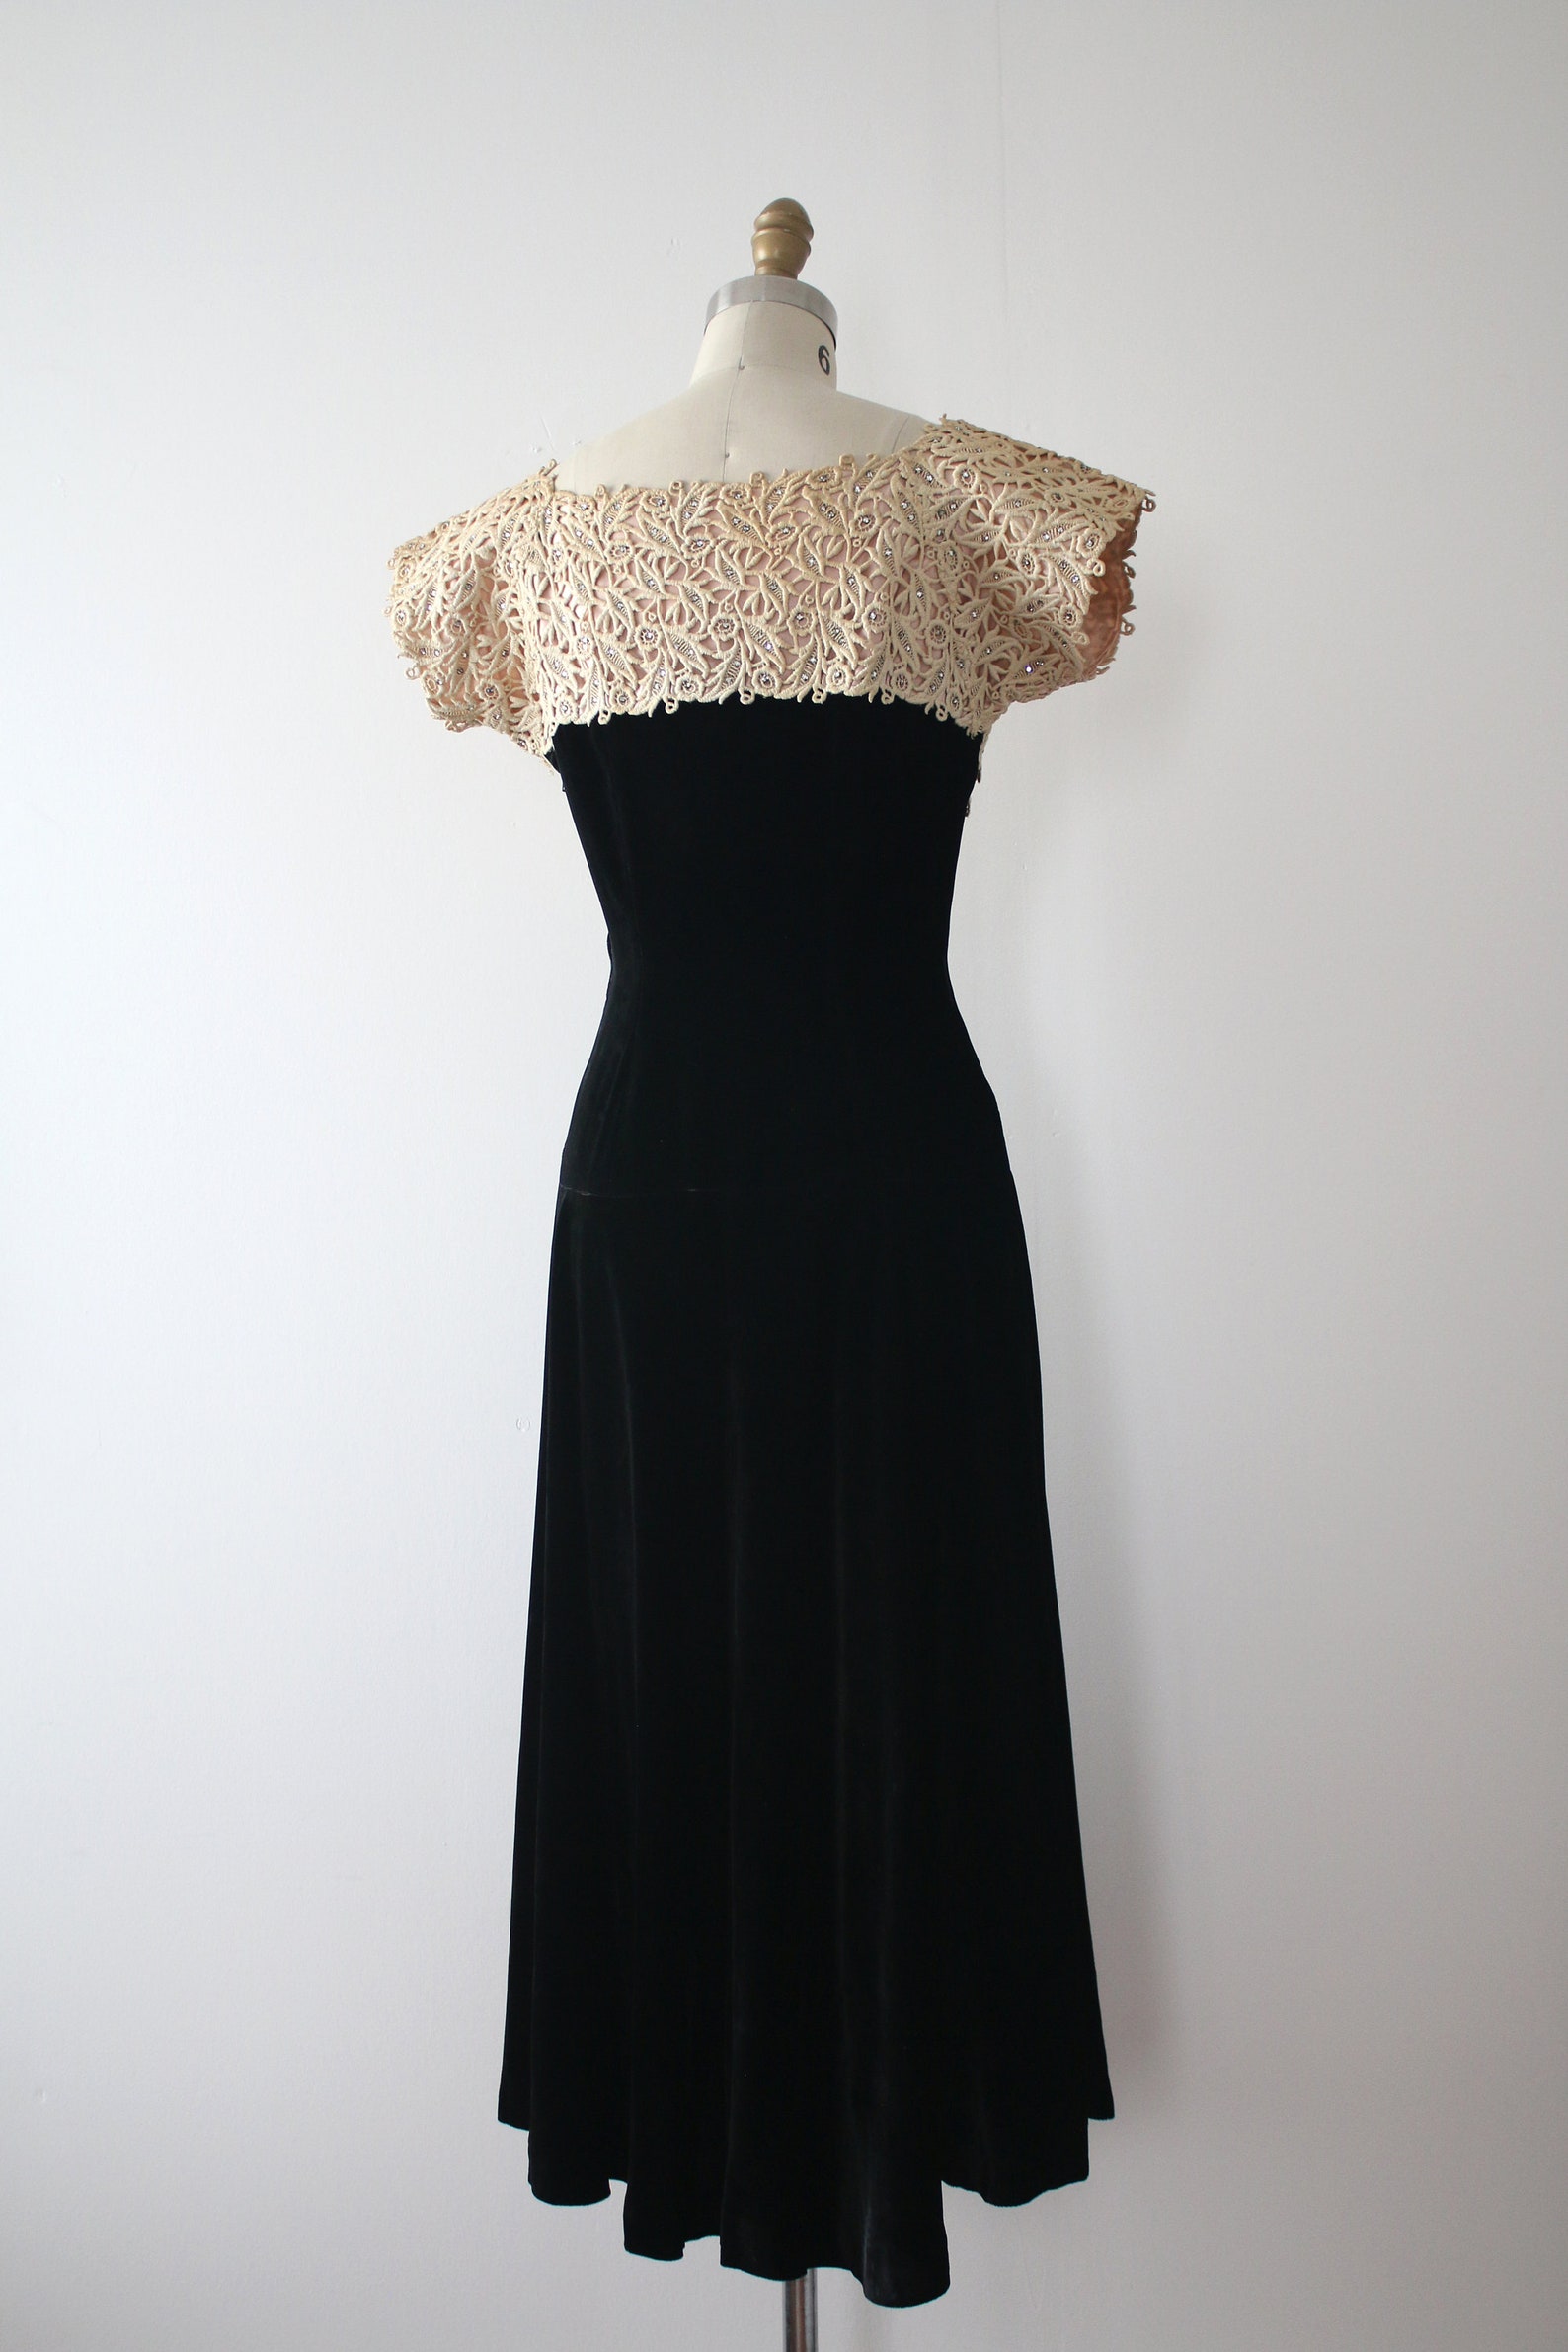 Vintage 1940s velvet & lace dress | Etsy